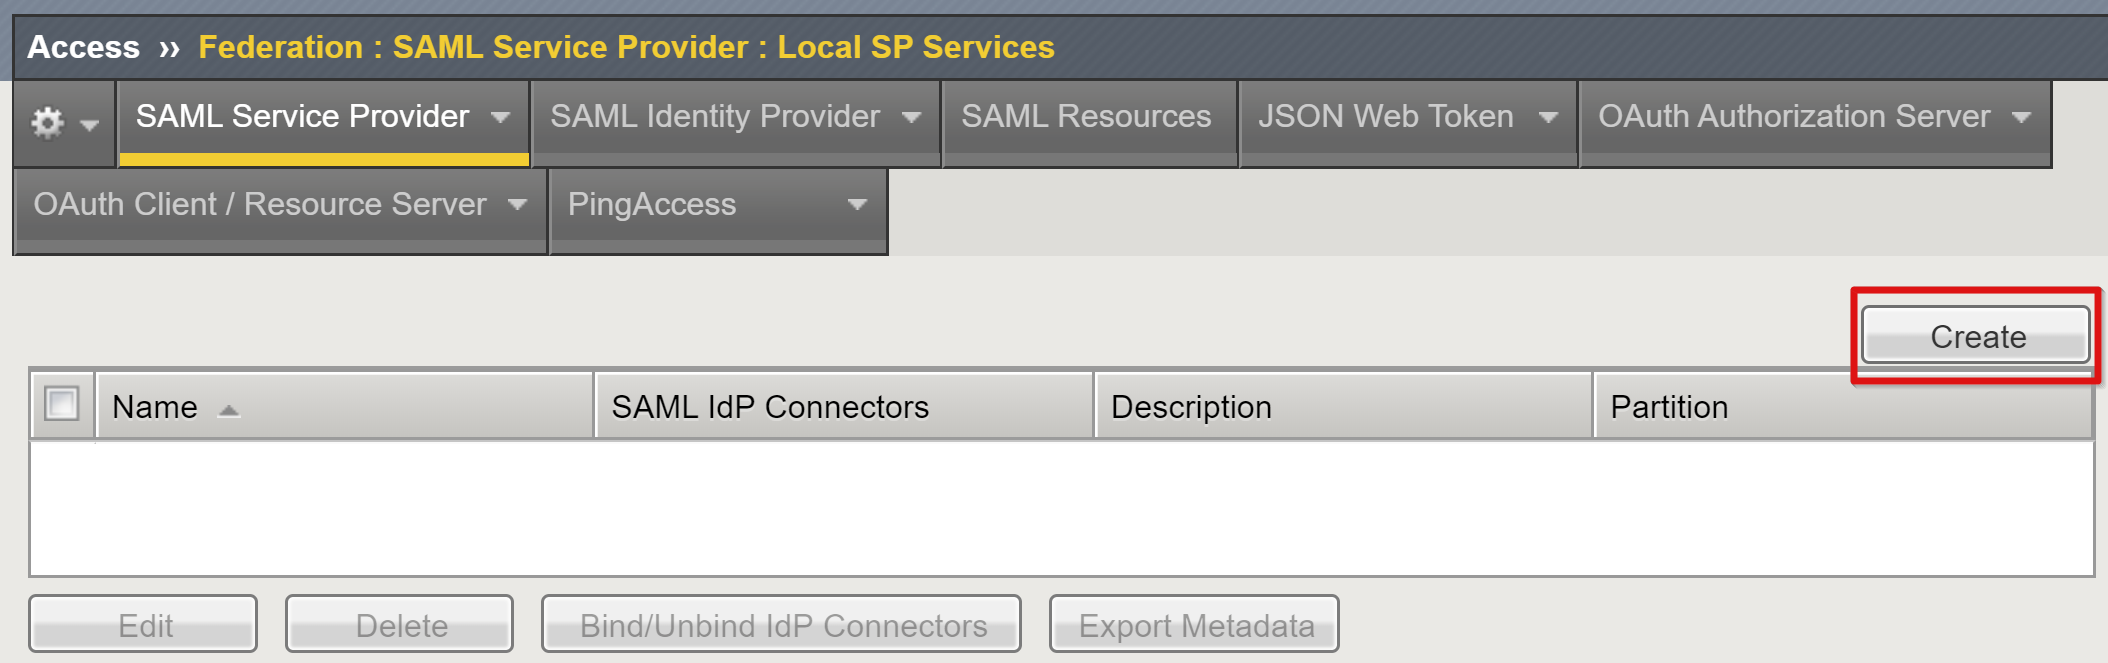 Image shows BIG-IP SAML configuration